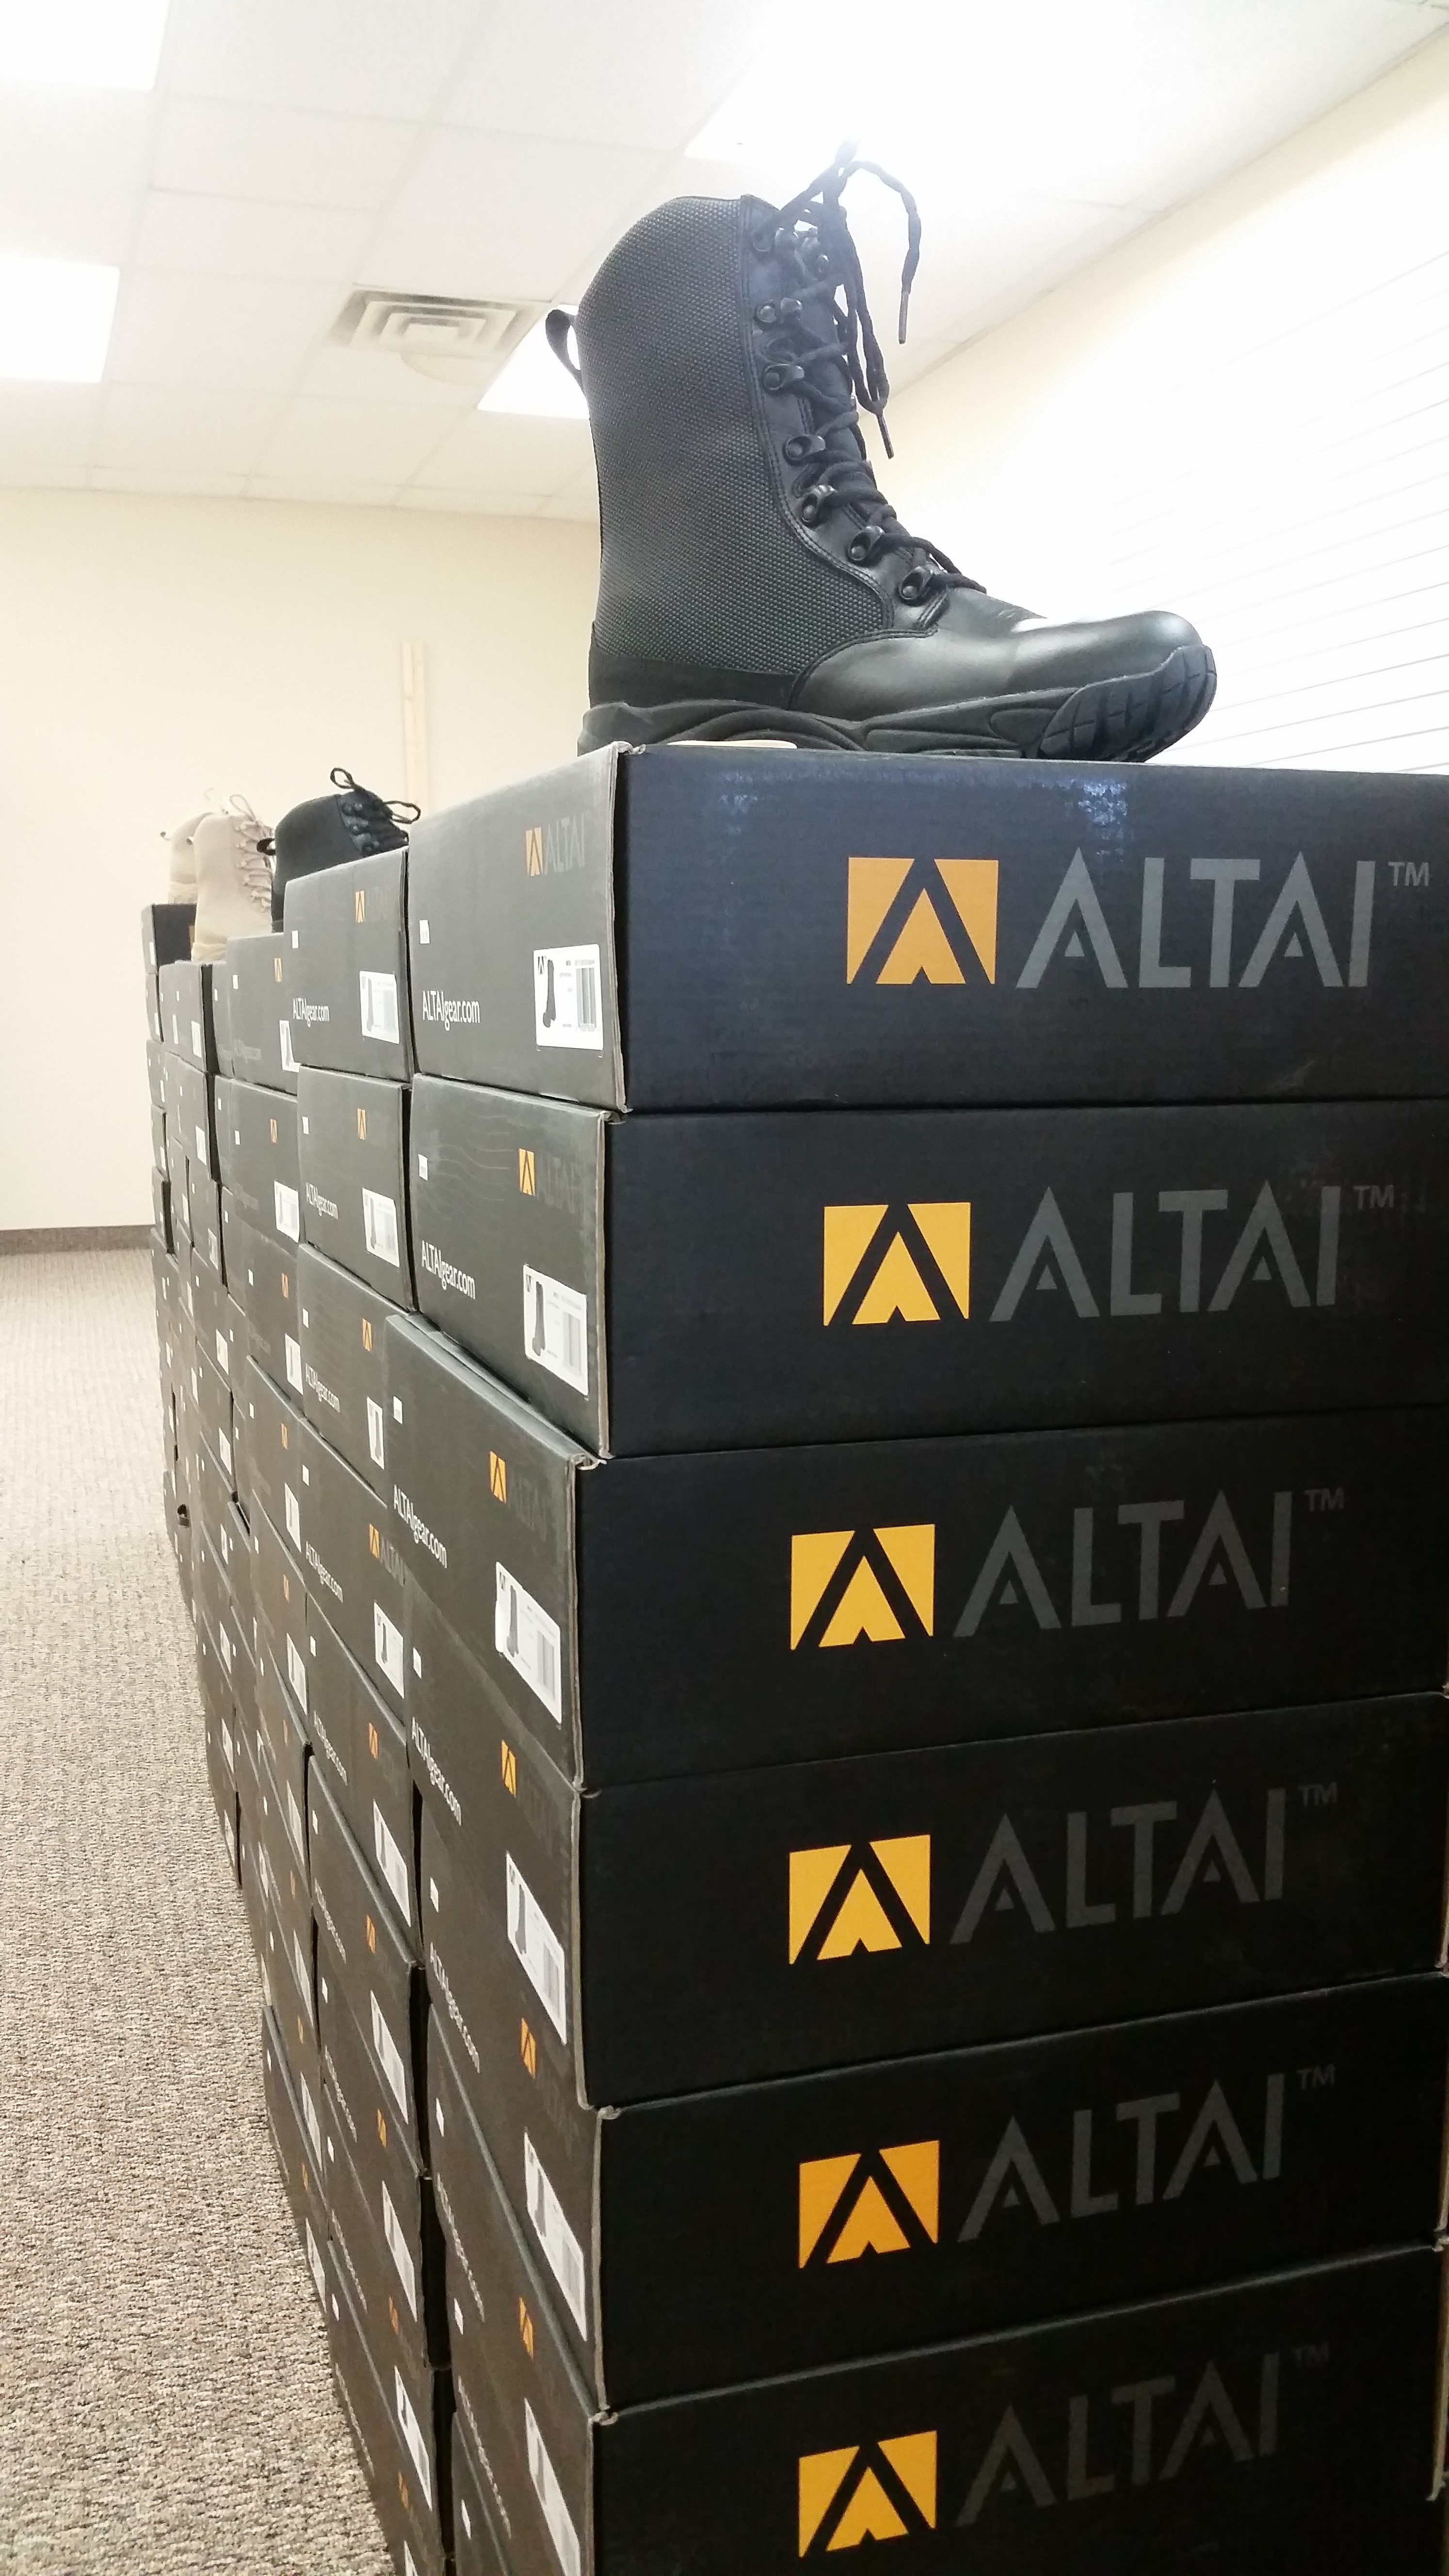 ALTAI™ Tactical Boot Retailers